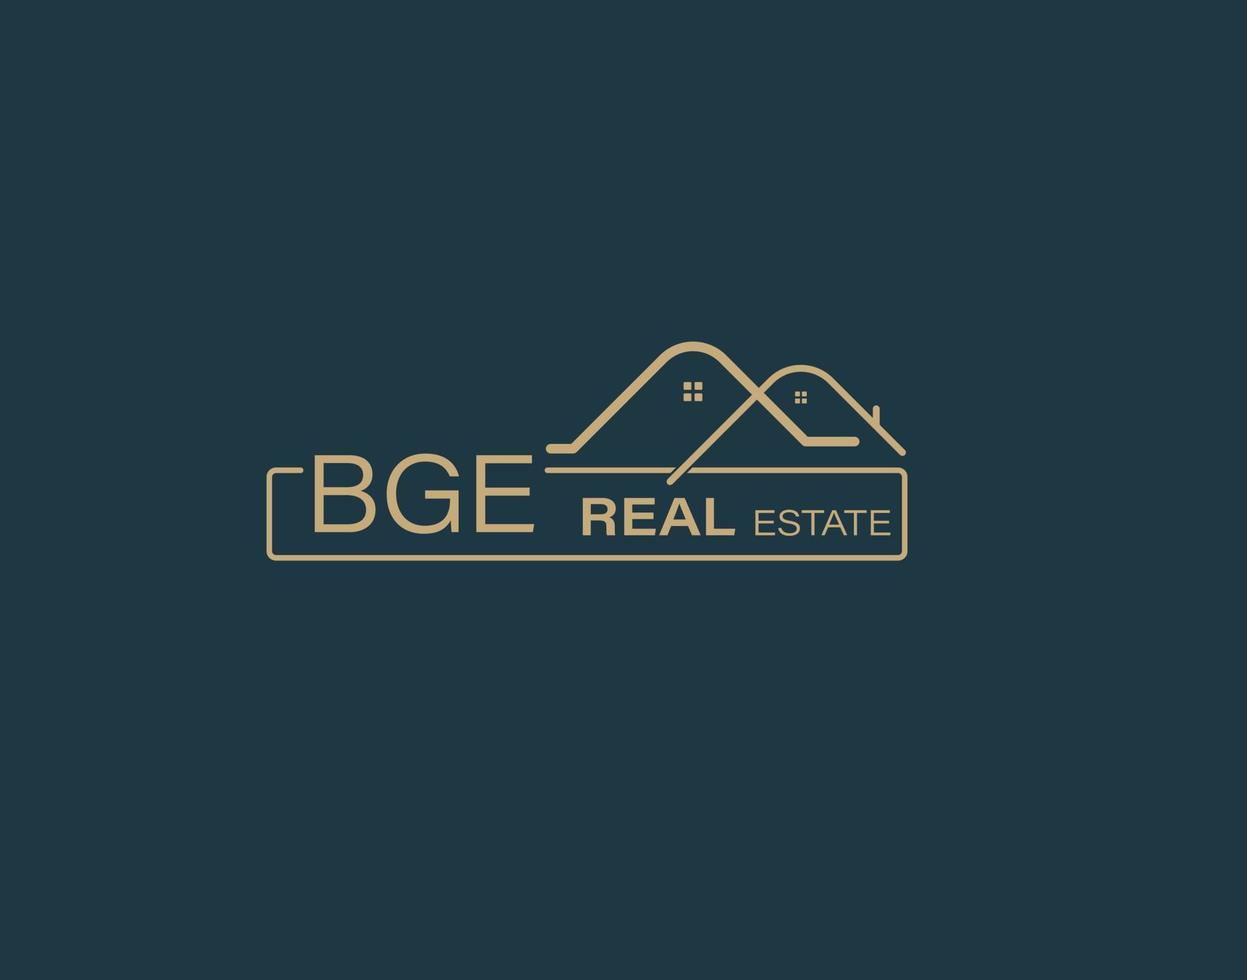 BGE Real Estate and Consultants Logo Design Vectors images. Luxury Real Estate Logo Design